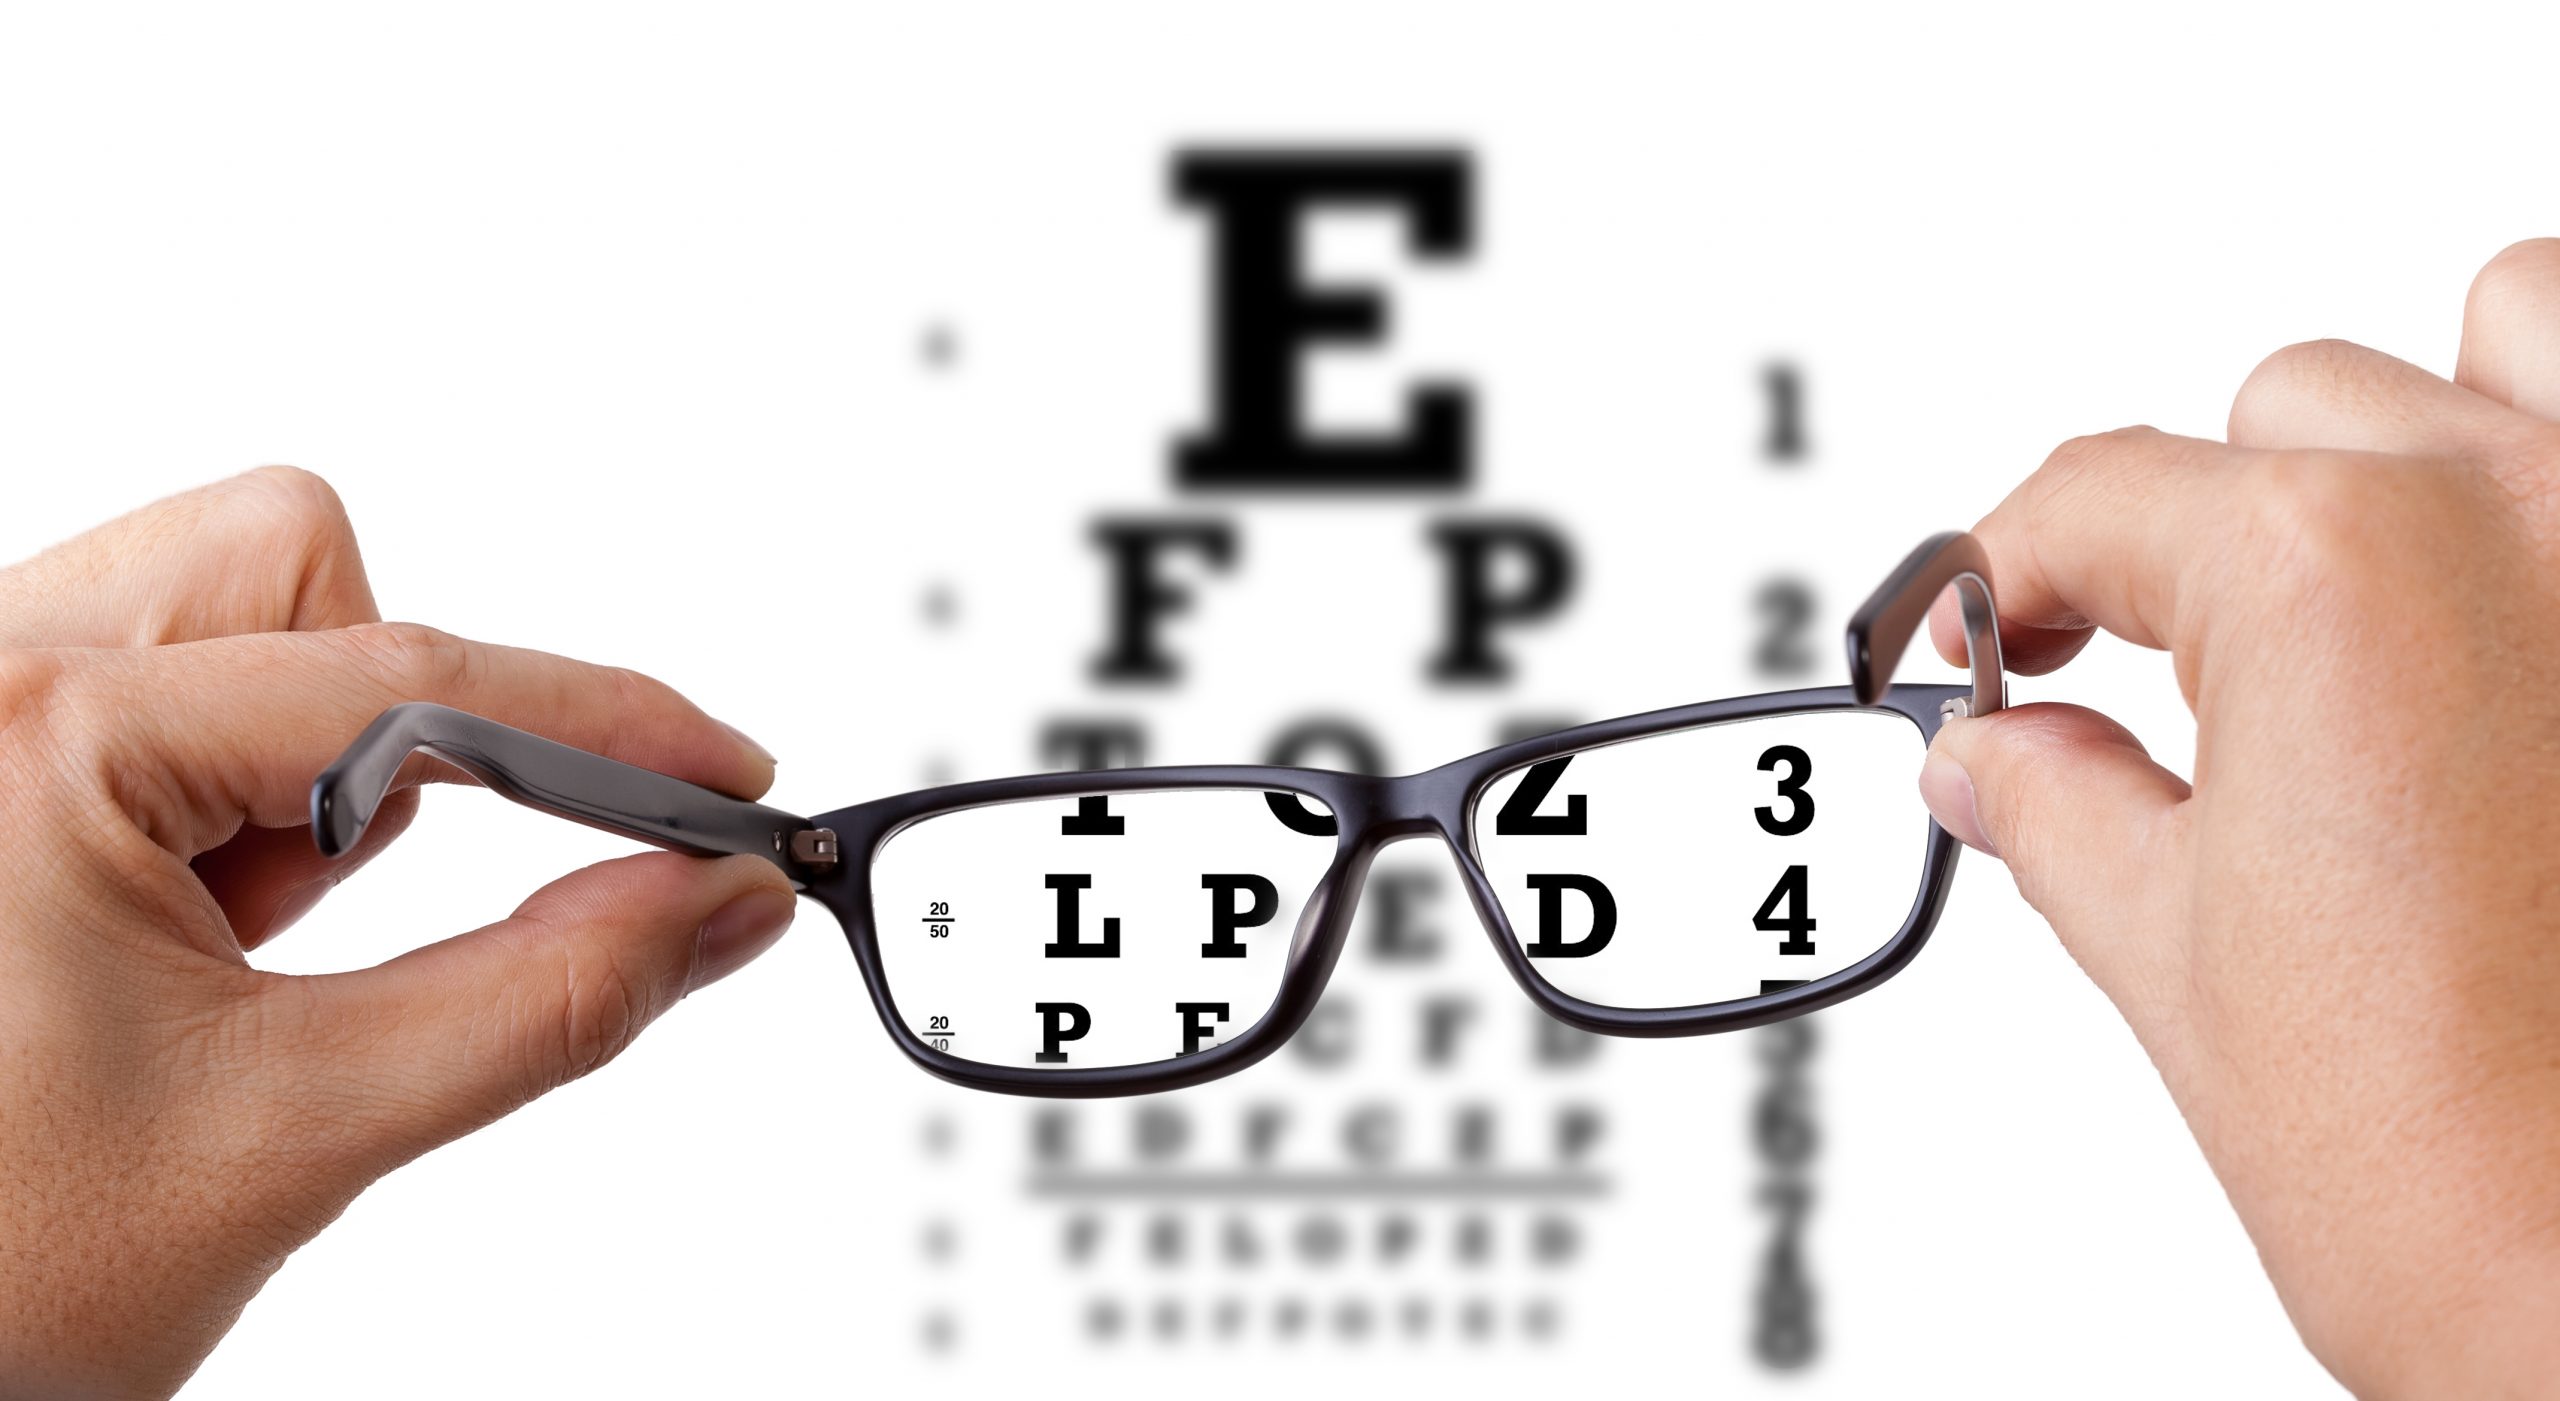 miopia 2 0 este poate deteriora vederea din cauza amigdalitei